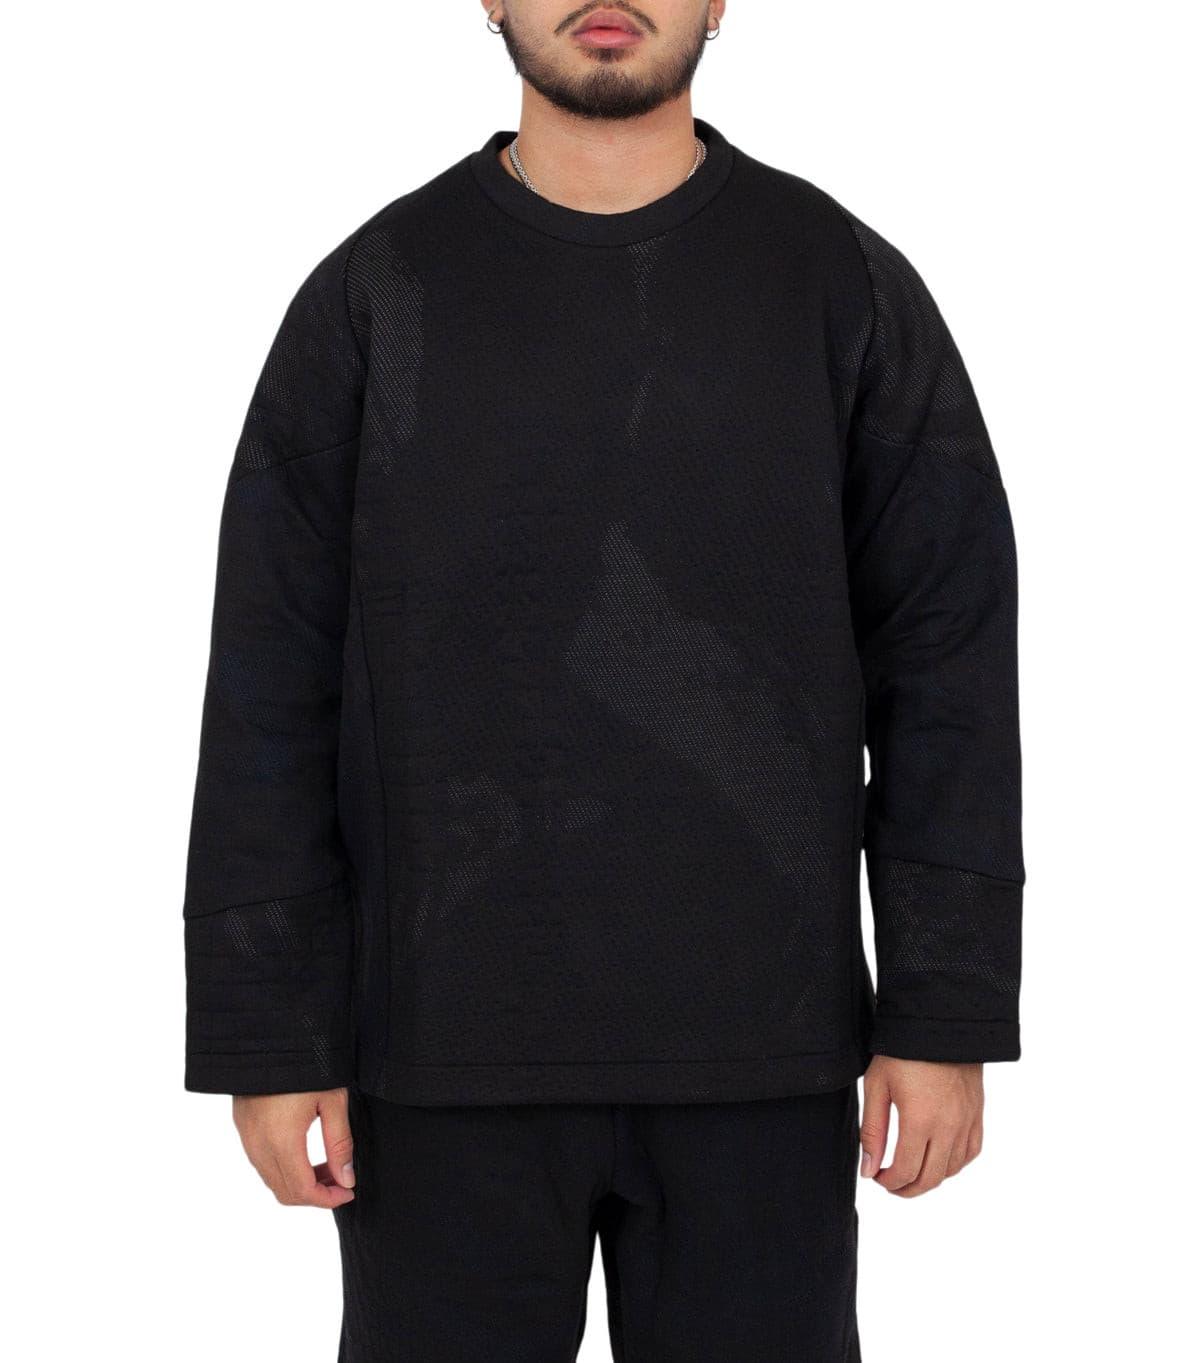 BYBORRE Weightmap Sweater Black Multi